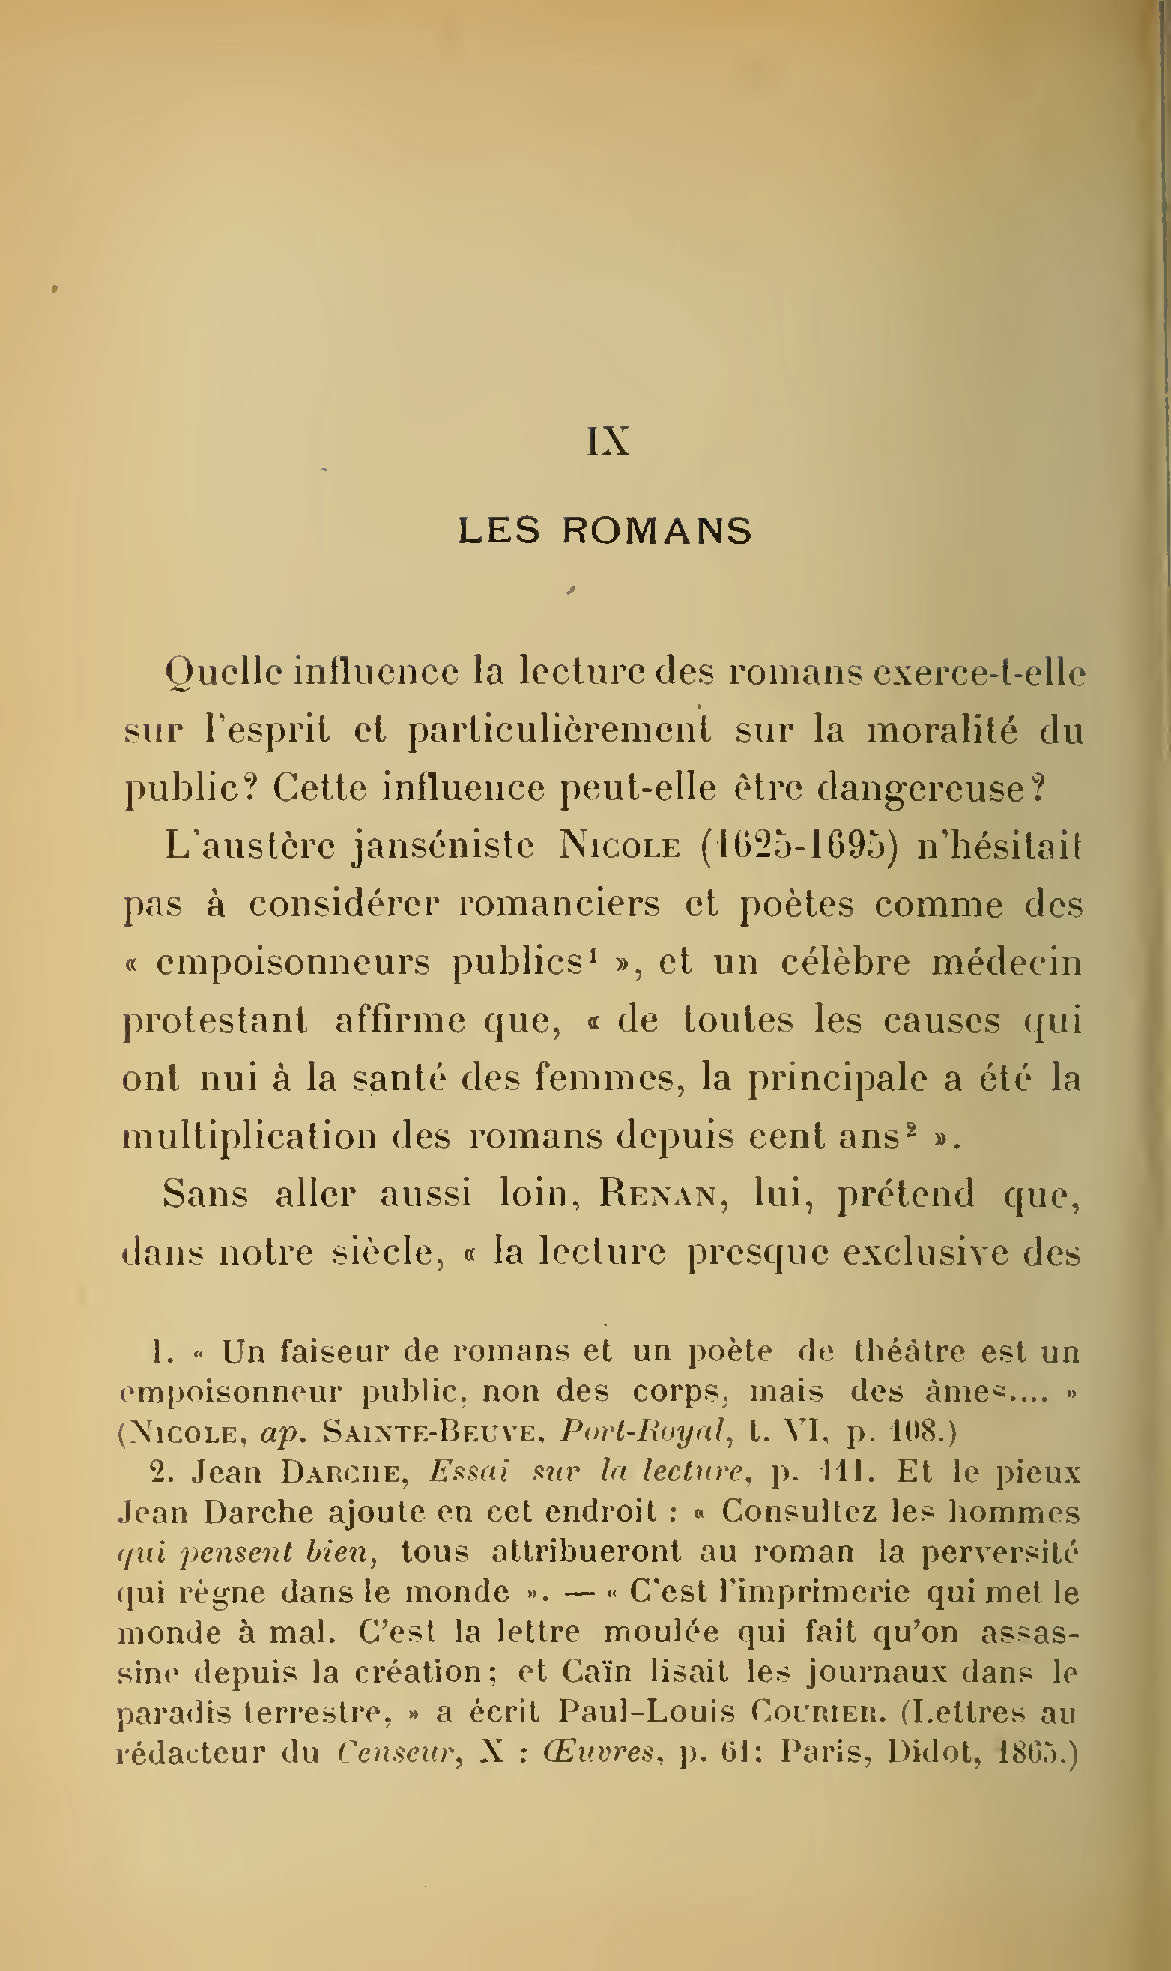 Albert Cim, Le Livre, t. II, p. 186.